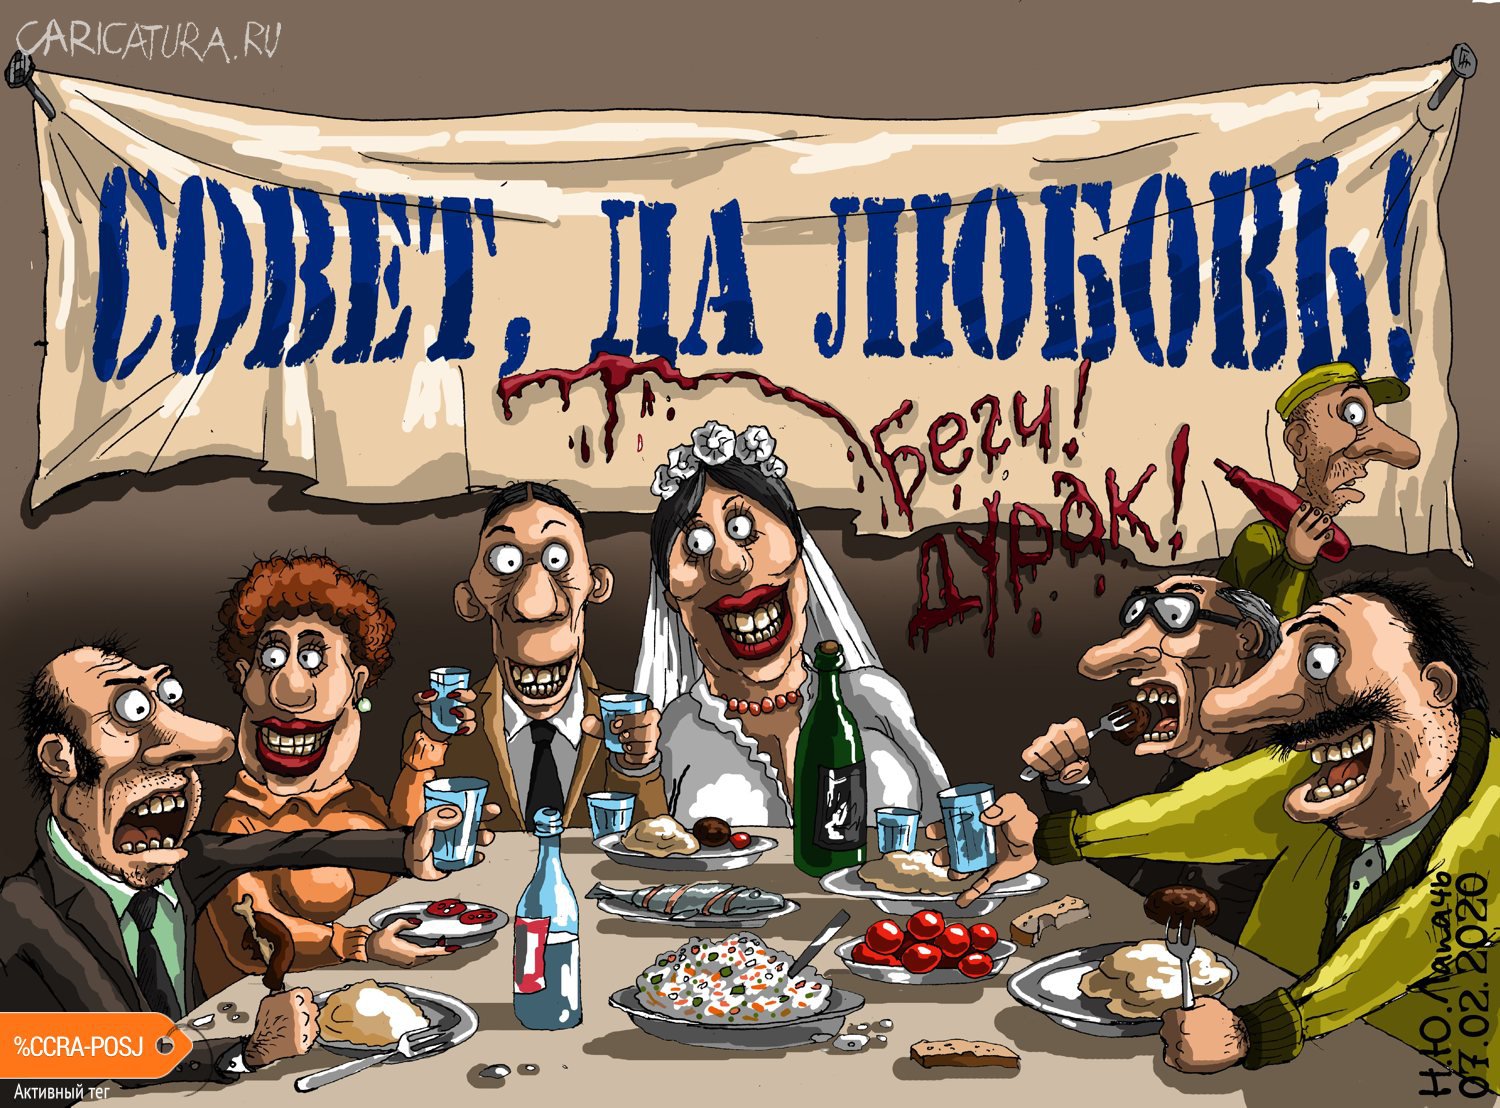 Карикатура "Совет", Теплый Телогрей